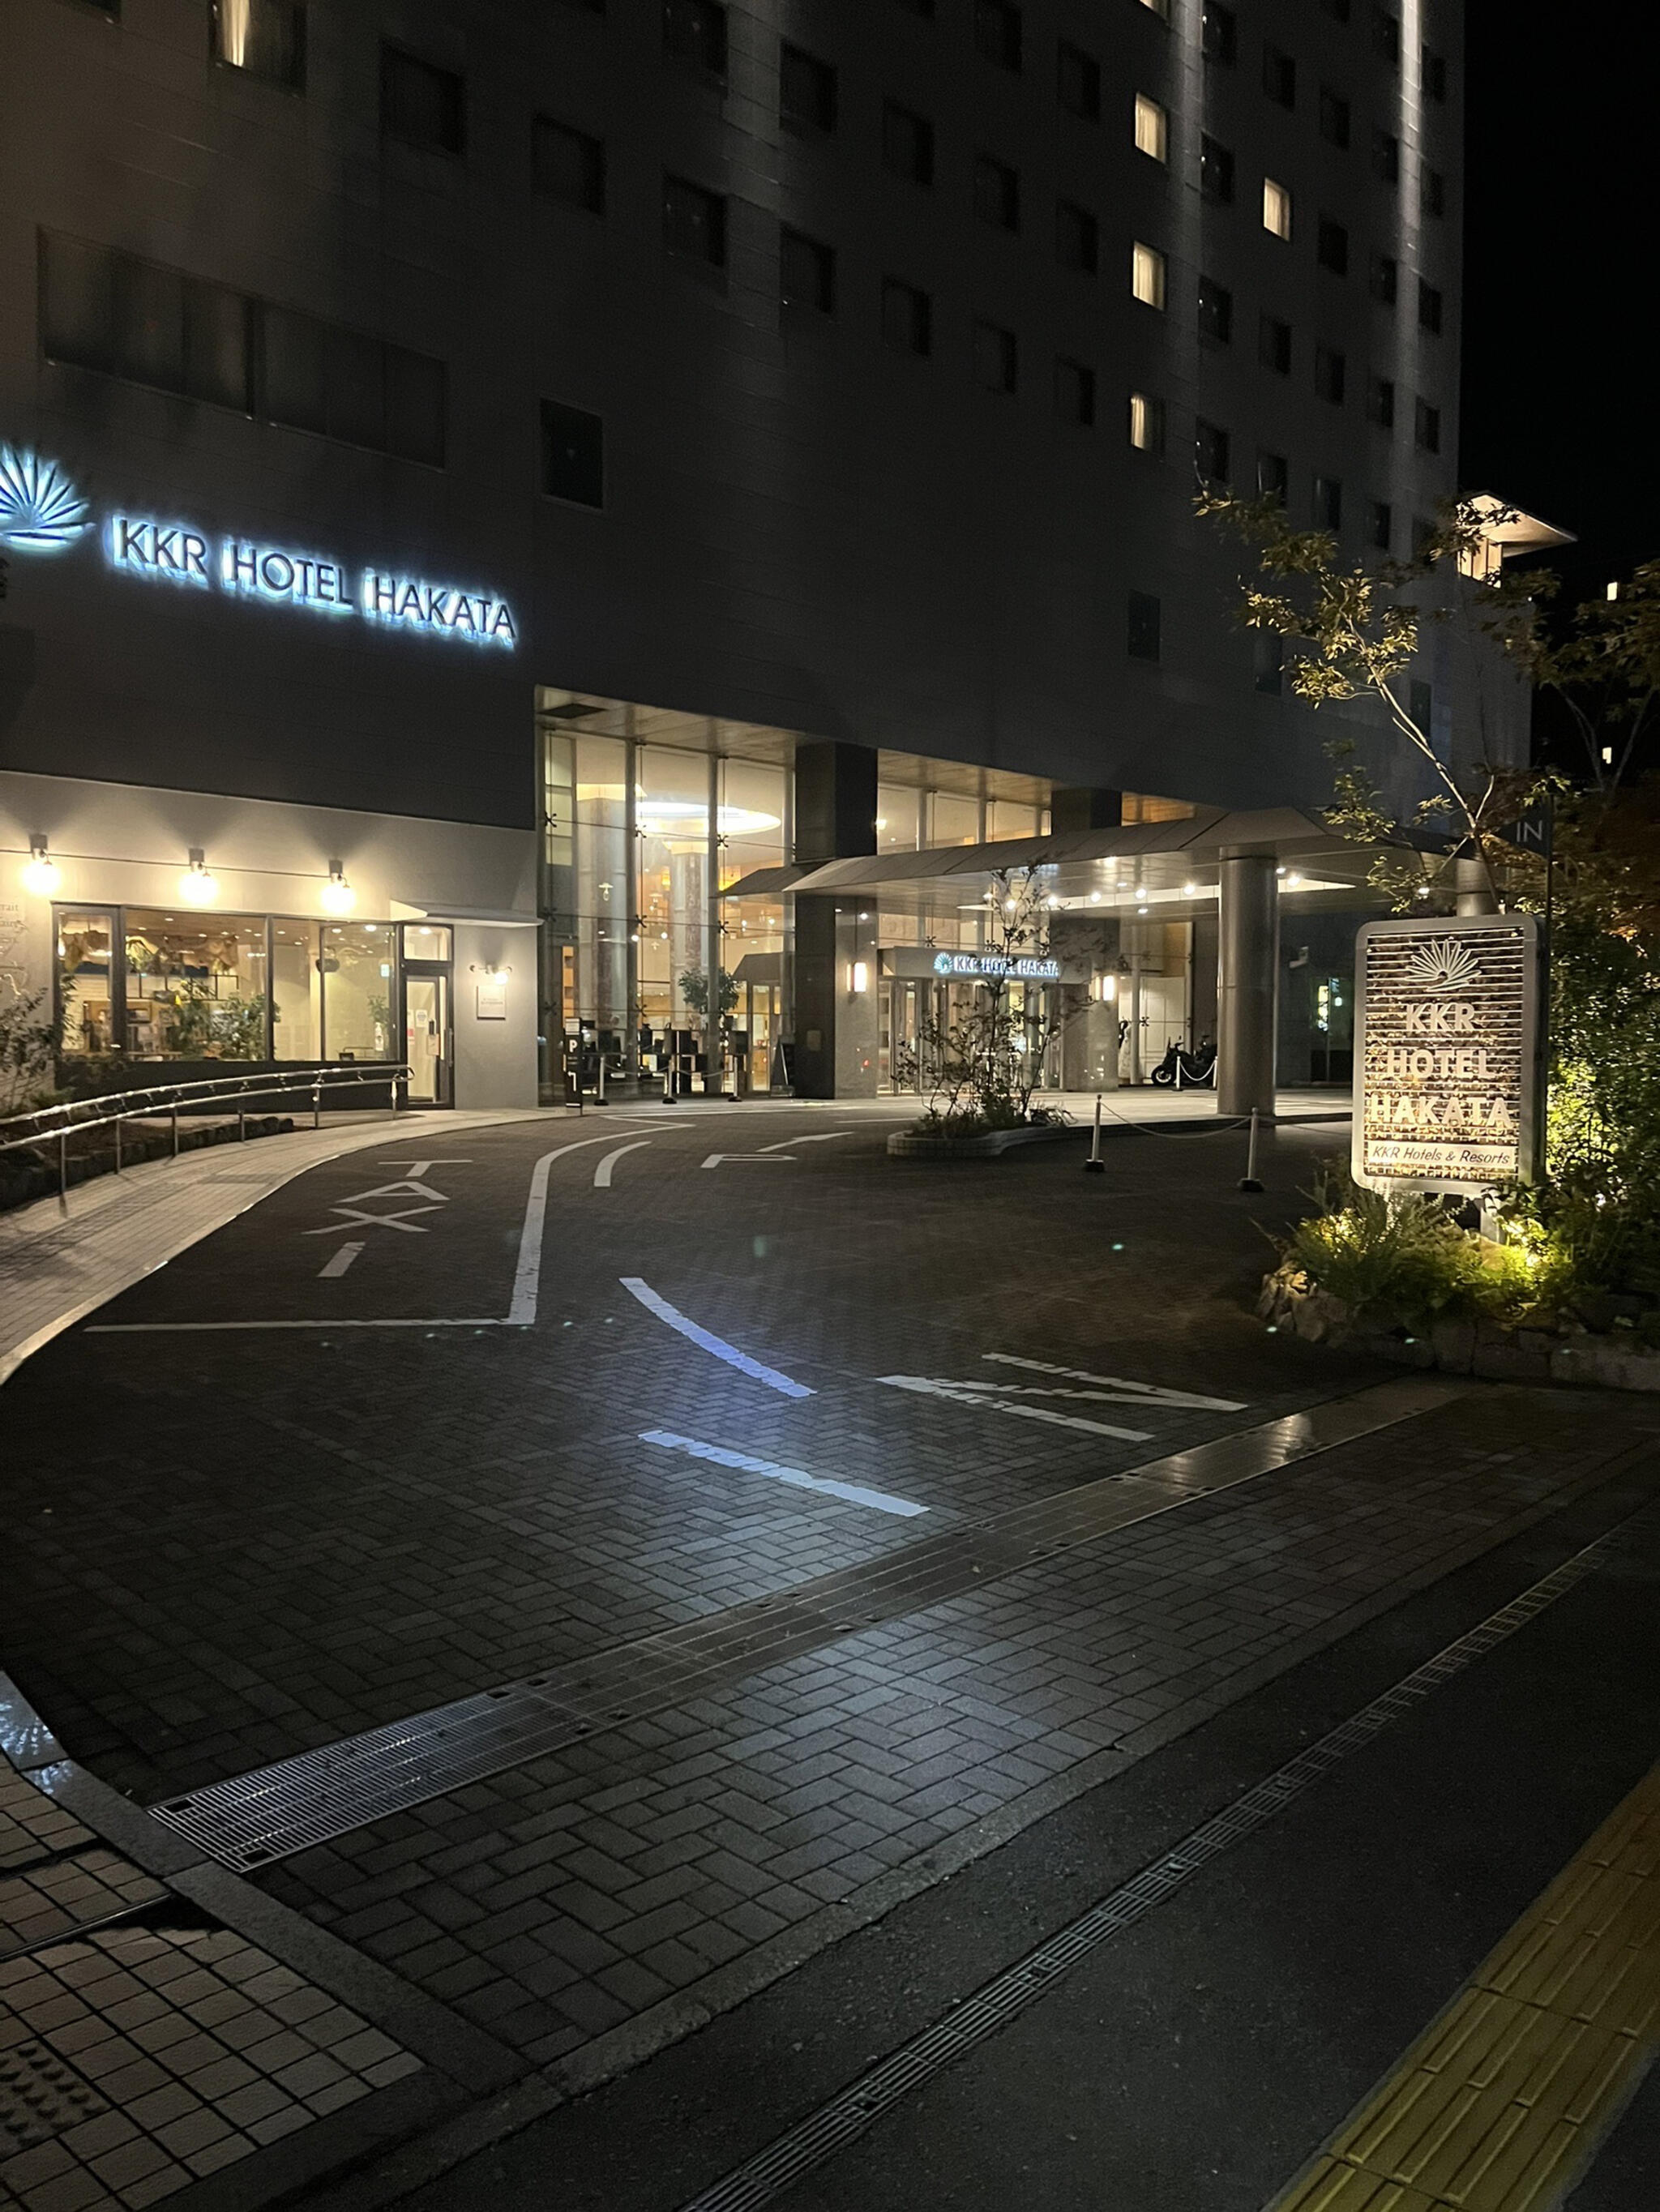 KKRホテル博多(国家公務員共済組合連合会福岡共済会館)の代表写真1